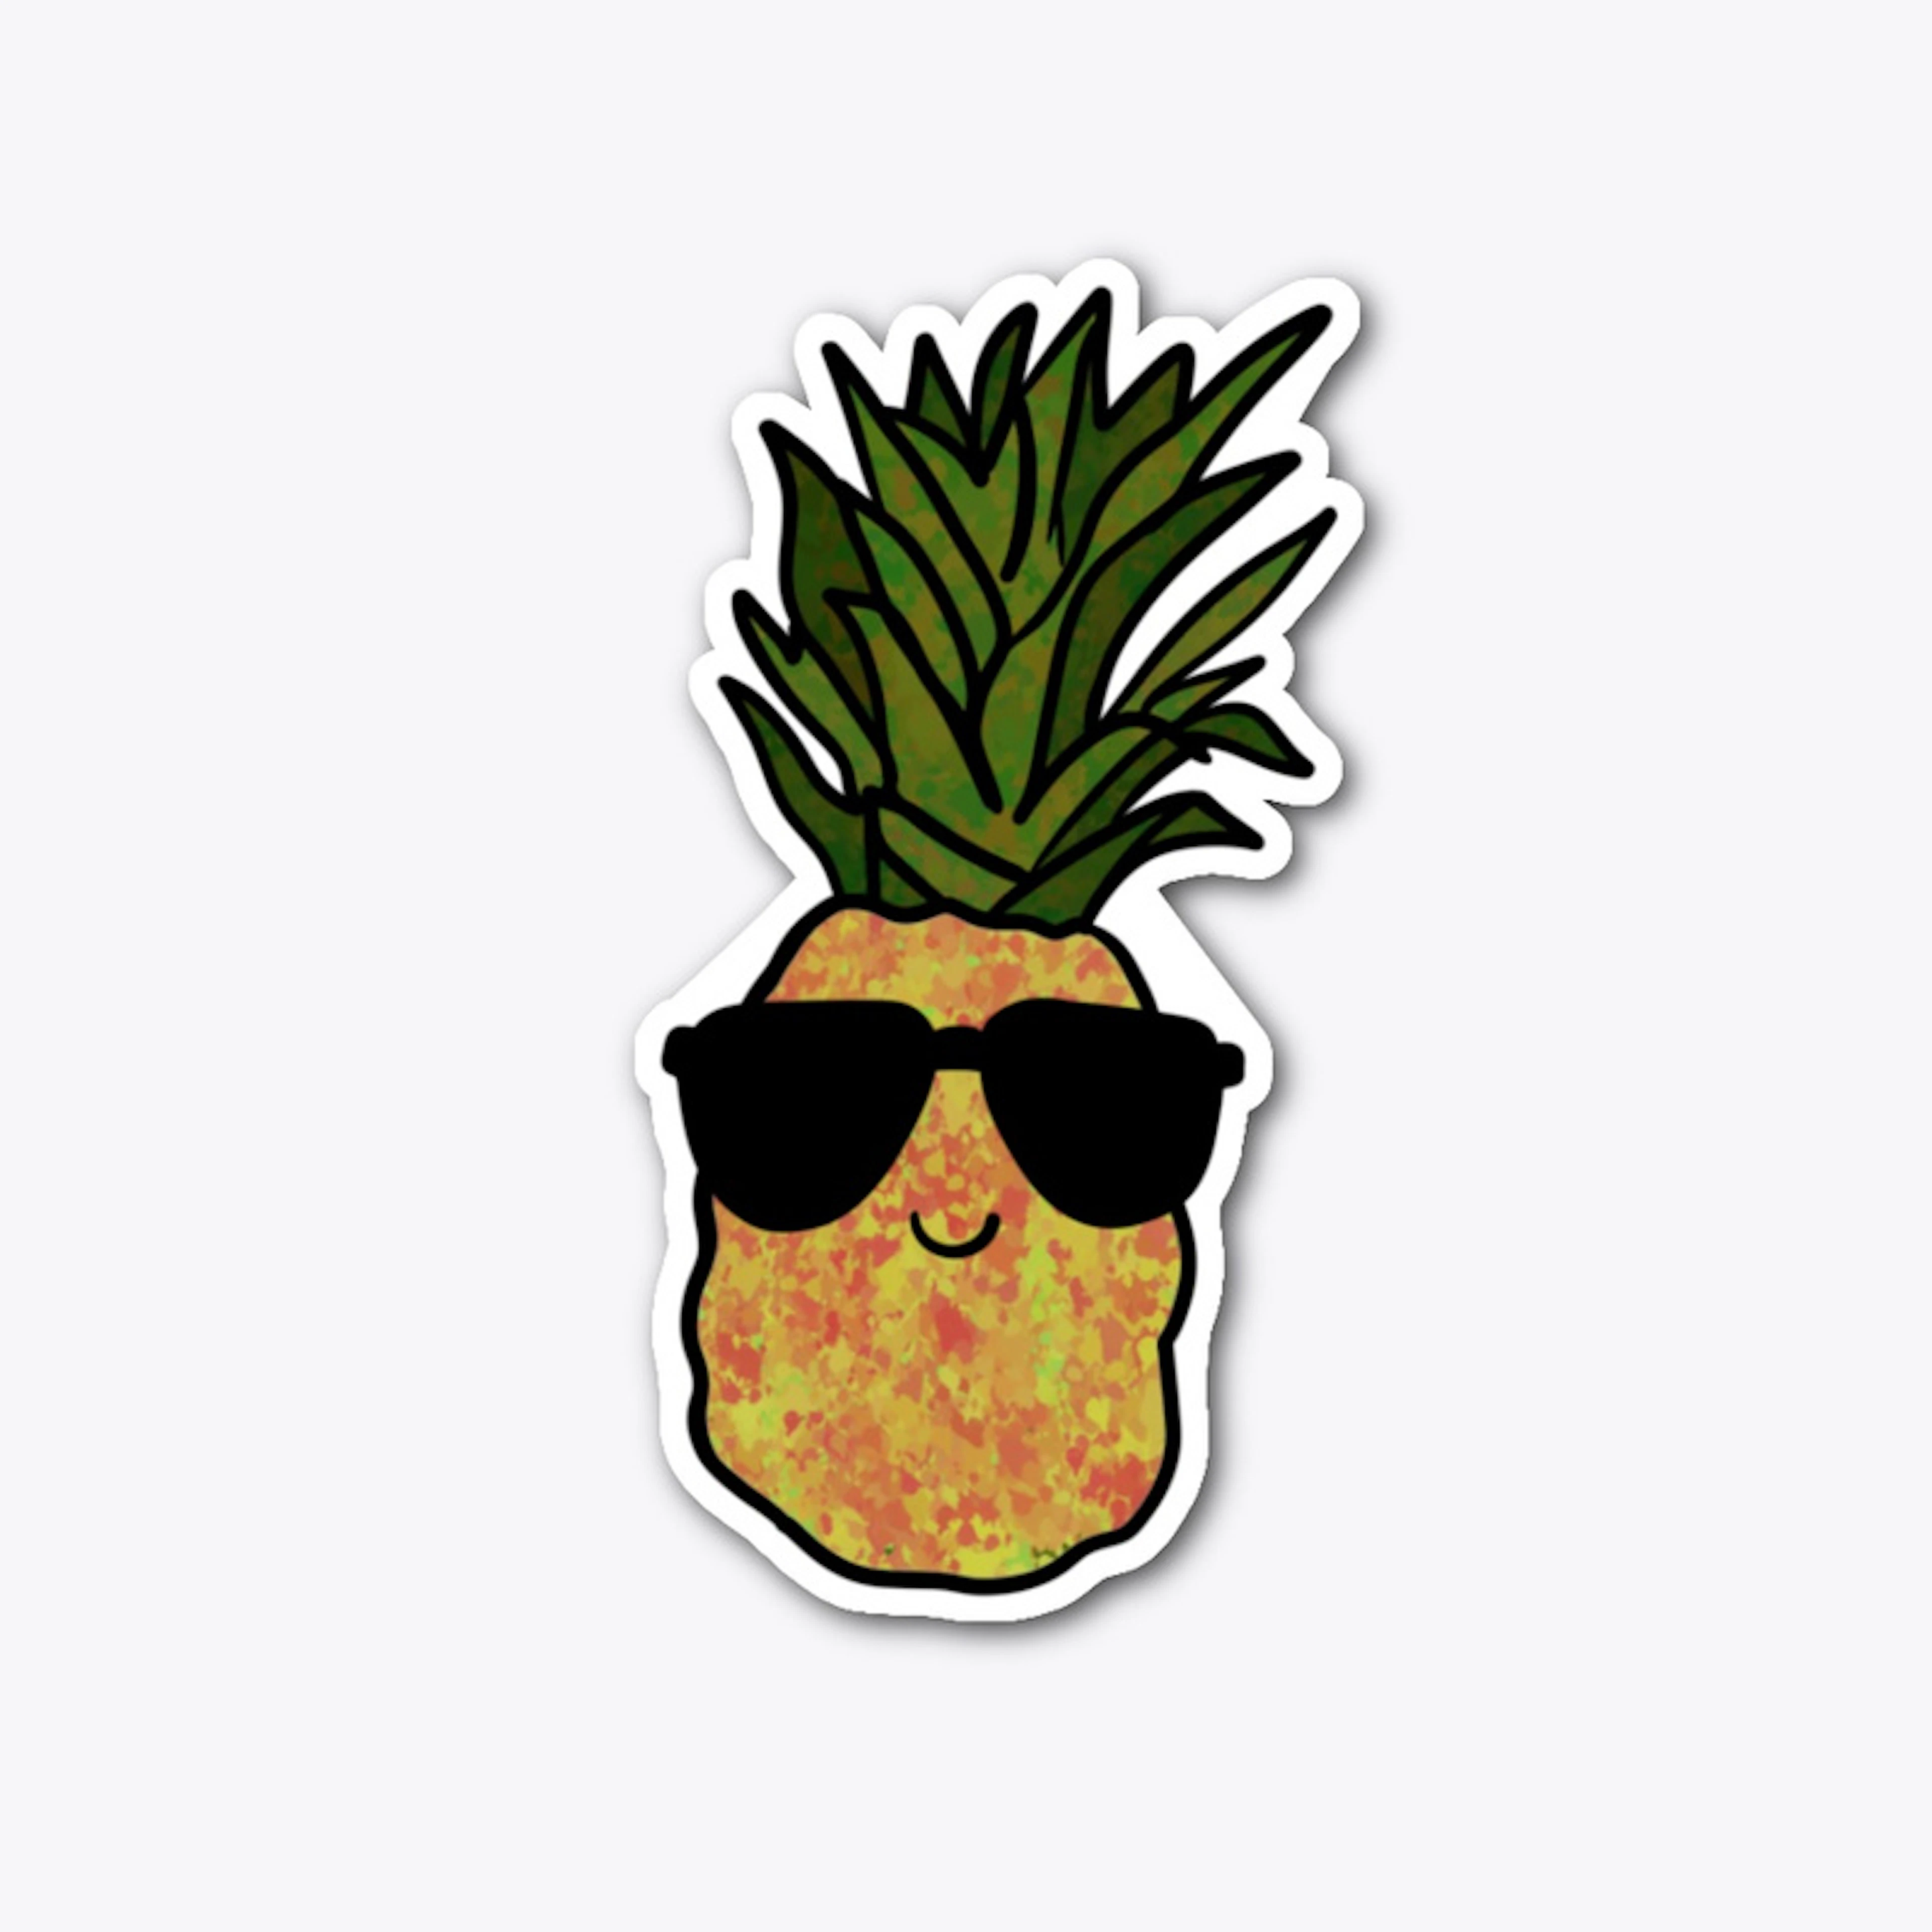 Sick Pineapple 